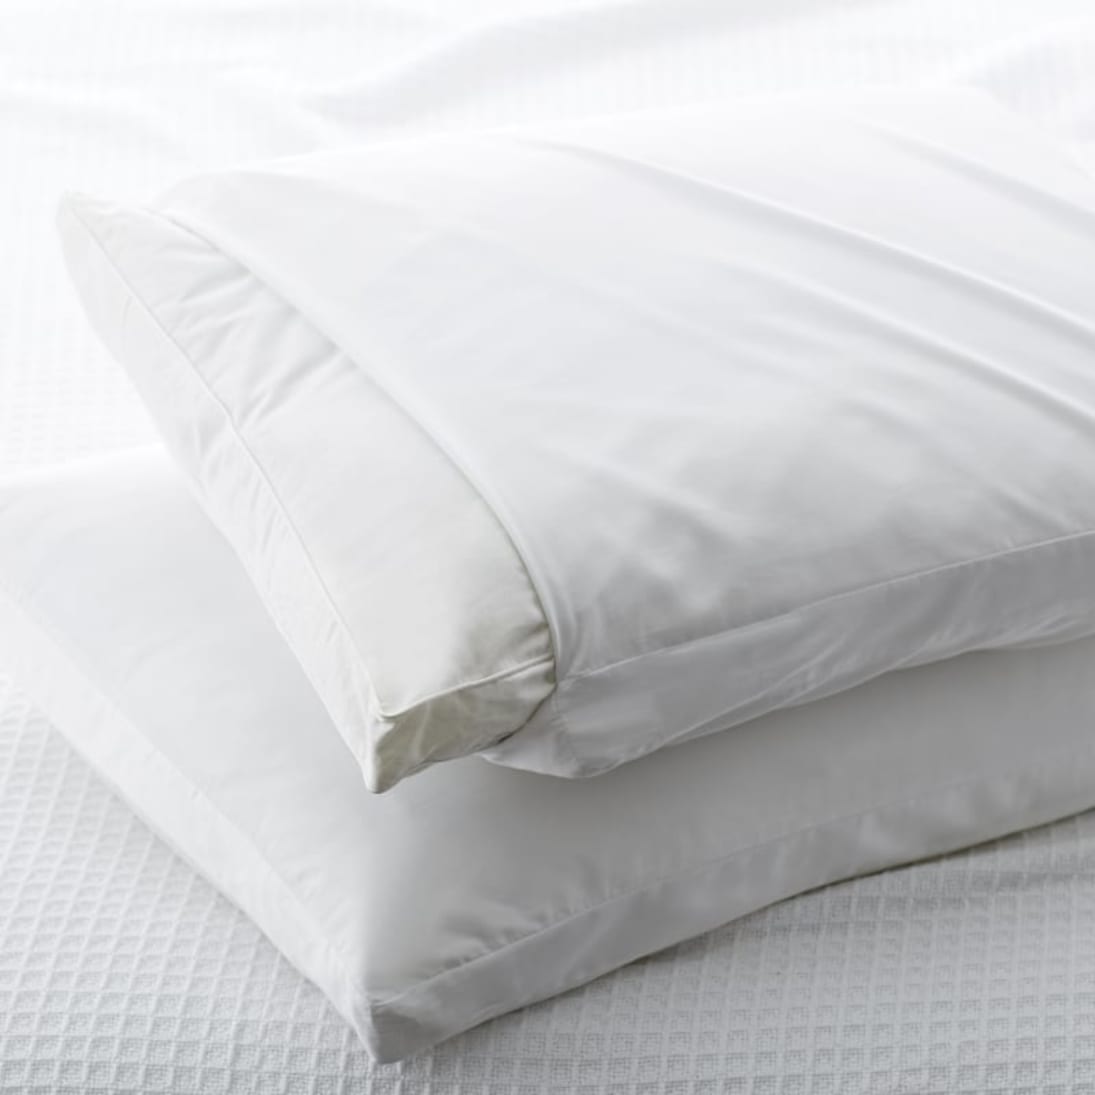 2 Pc Queen 300 TC Zippered Pillow Protector 100% Cotton Sateen Queen Size 